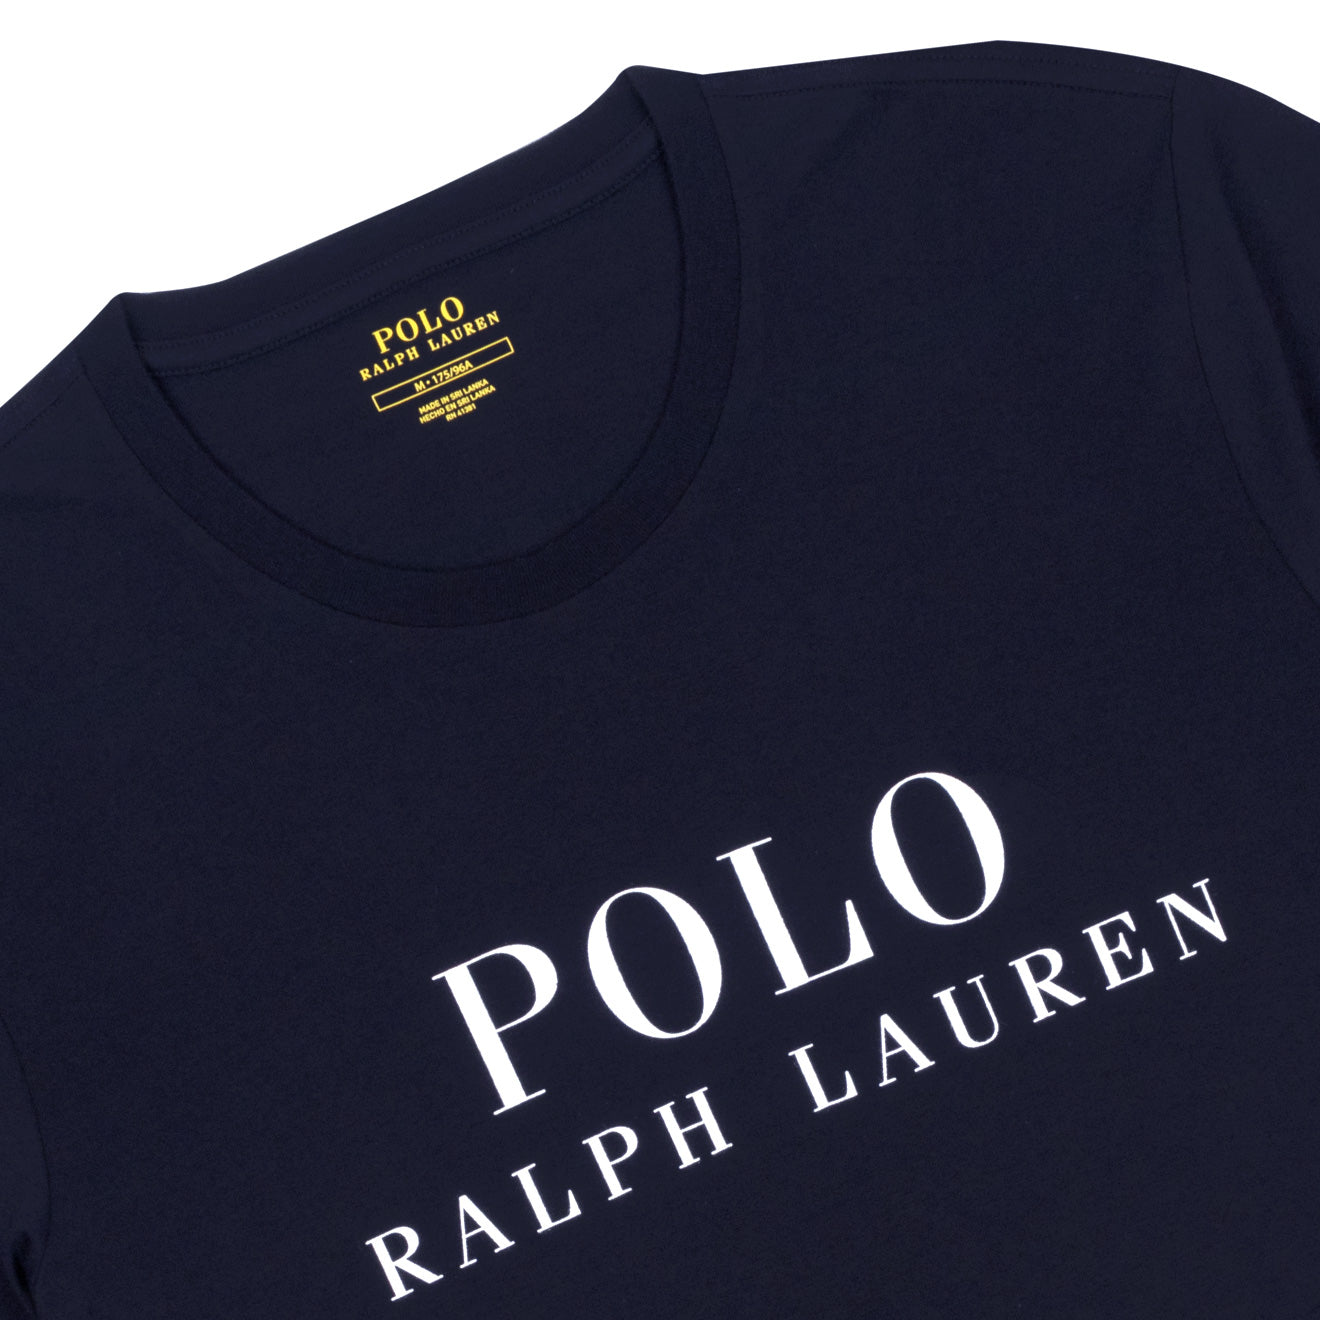 Polo Ralph Lauren S/S Crew Logo Sleep Top Cruise Navy | The Sporting Lodge